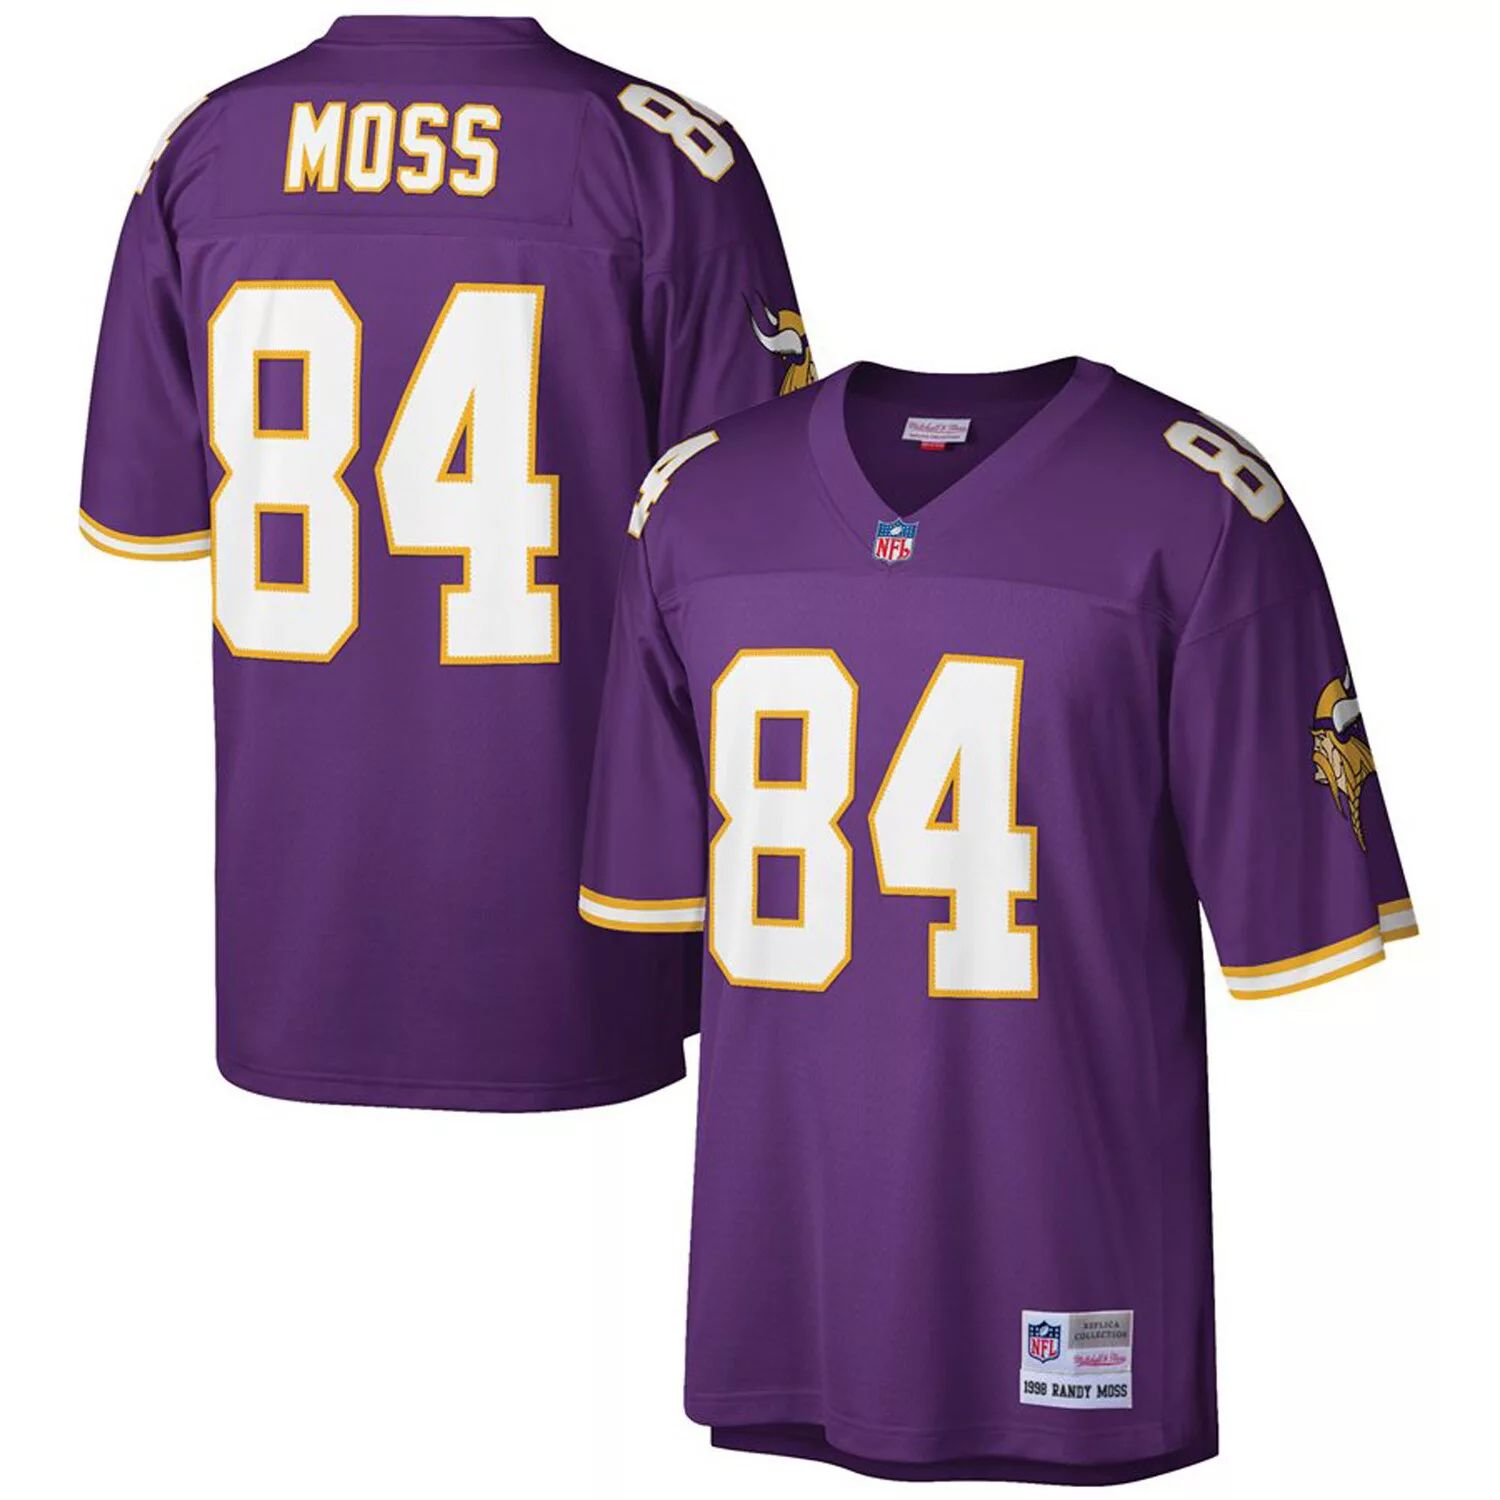 Мужская футболка Mitchell & Ness Randy Moss Purple Minnesota Vikings Big & Tall 1998, копия вышедшего на пенсию игрока